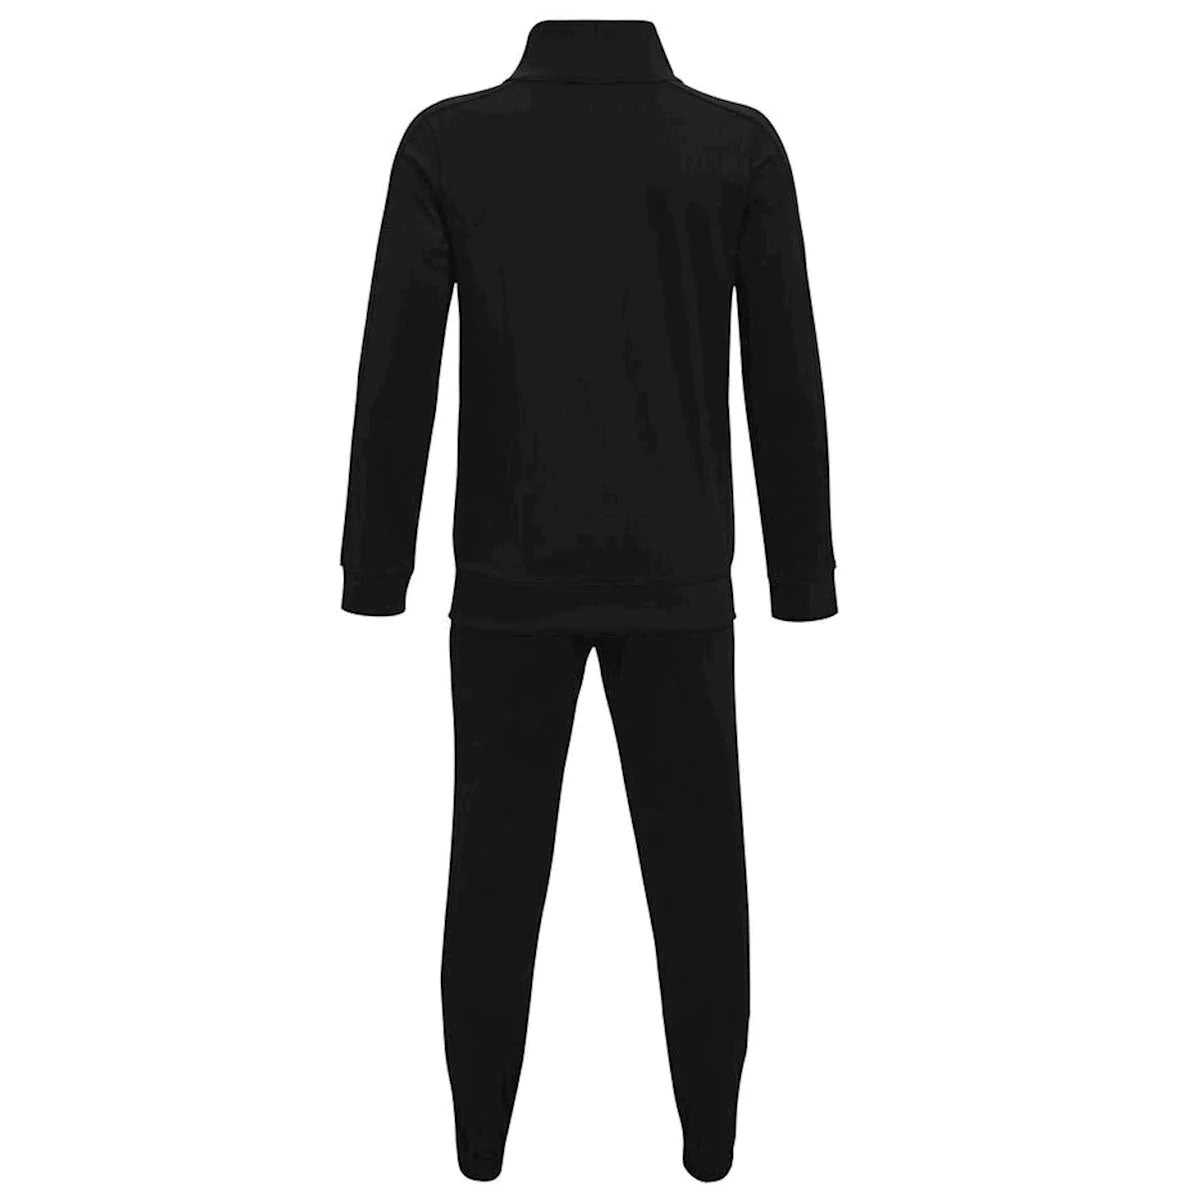 Under Armour Knit Track Suit - Boys - Black/White